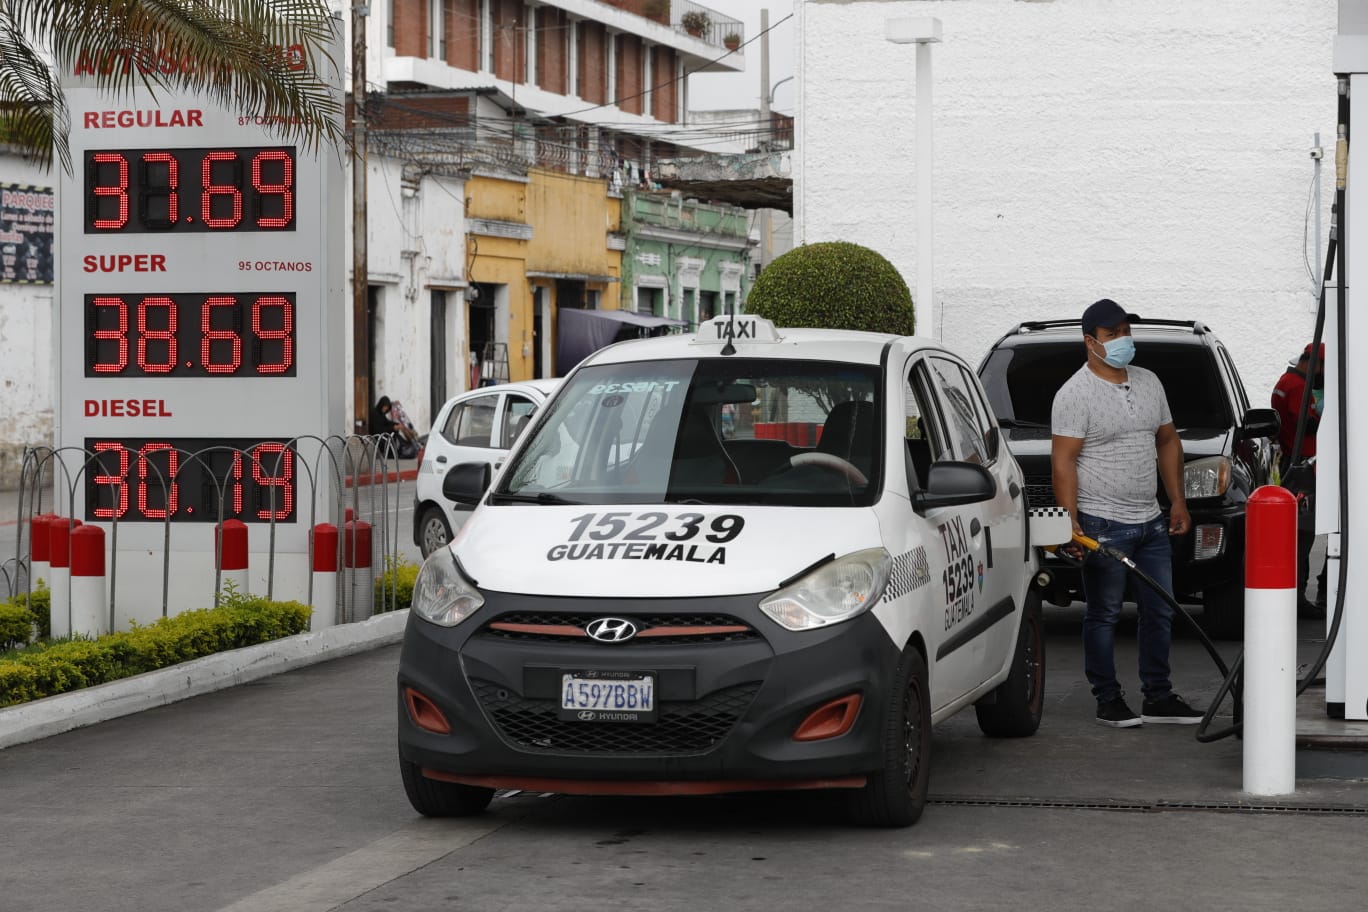 subsidio a la gasolina en Guatemala